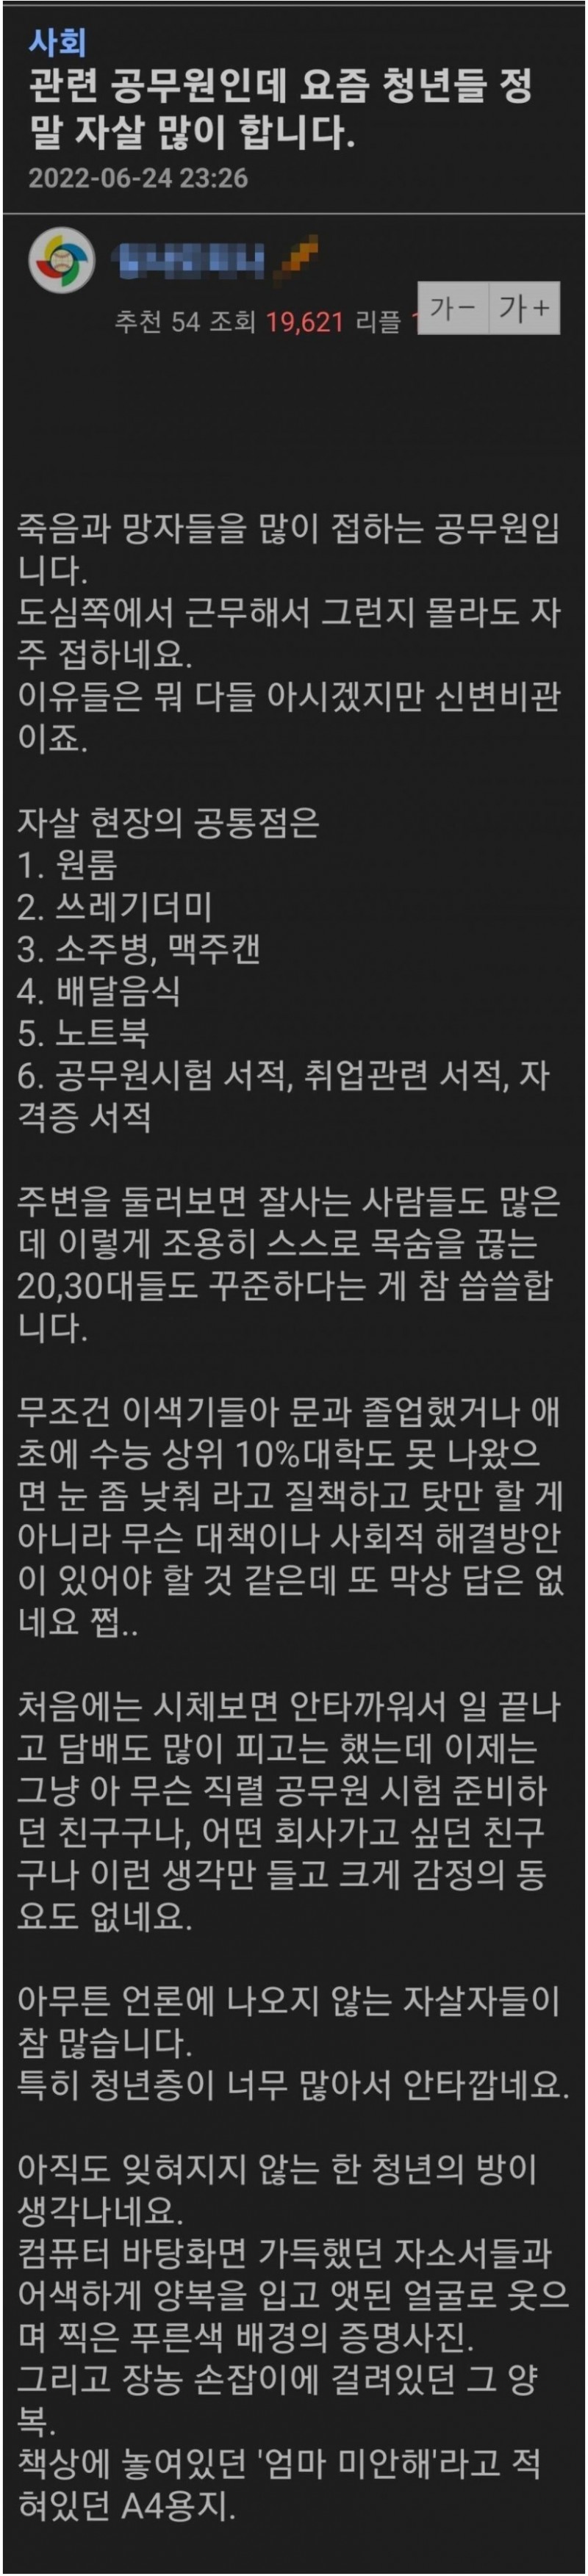 nokbeon.net-현직 공무원이 말하는 2030 자살-1번 이미지